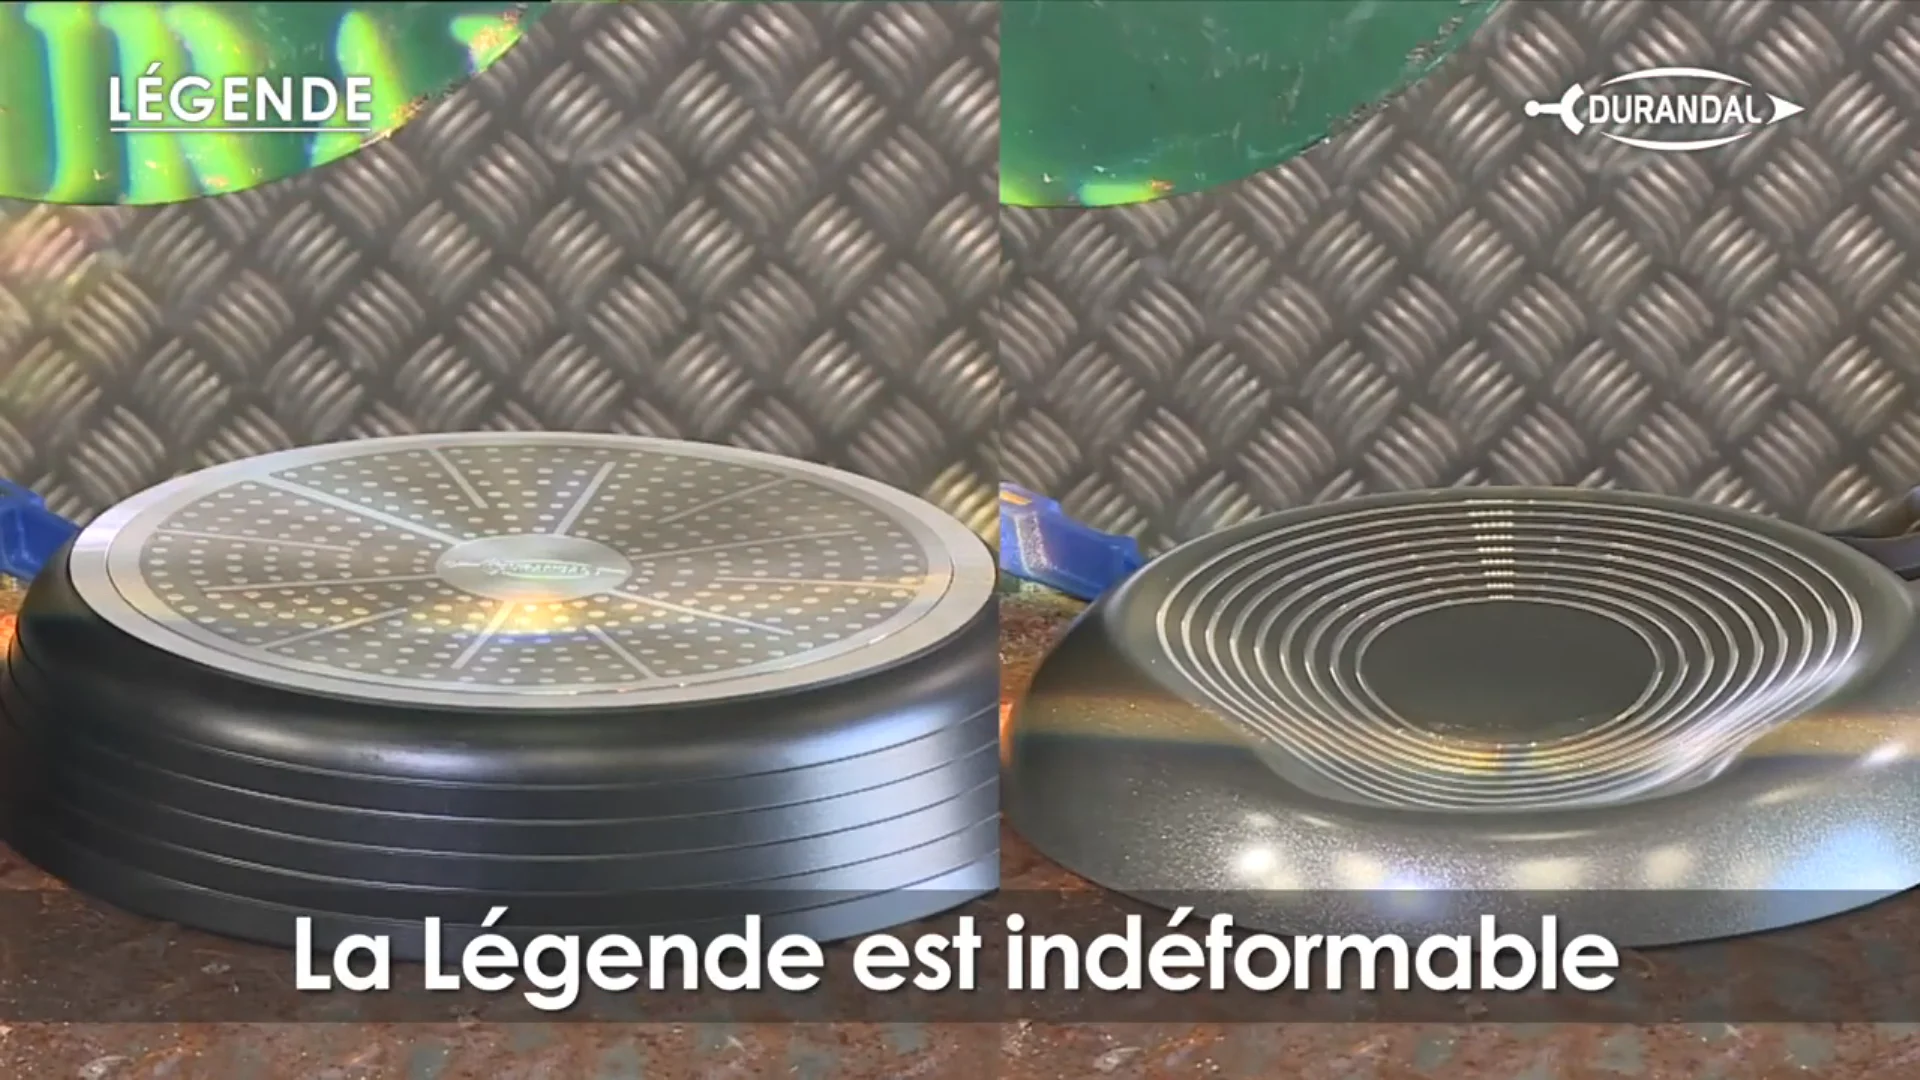 Poele Légende Durandal.mp4 on Vimeo